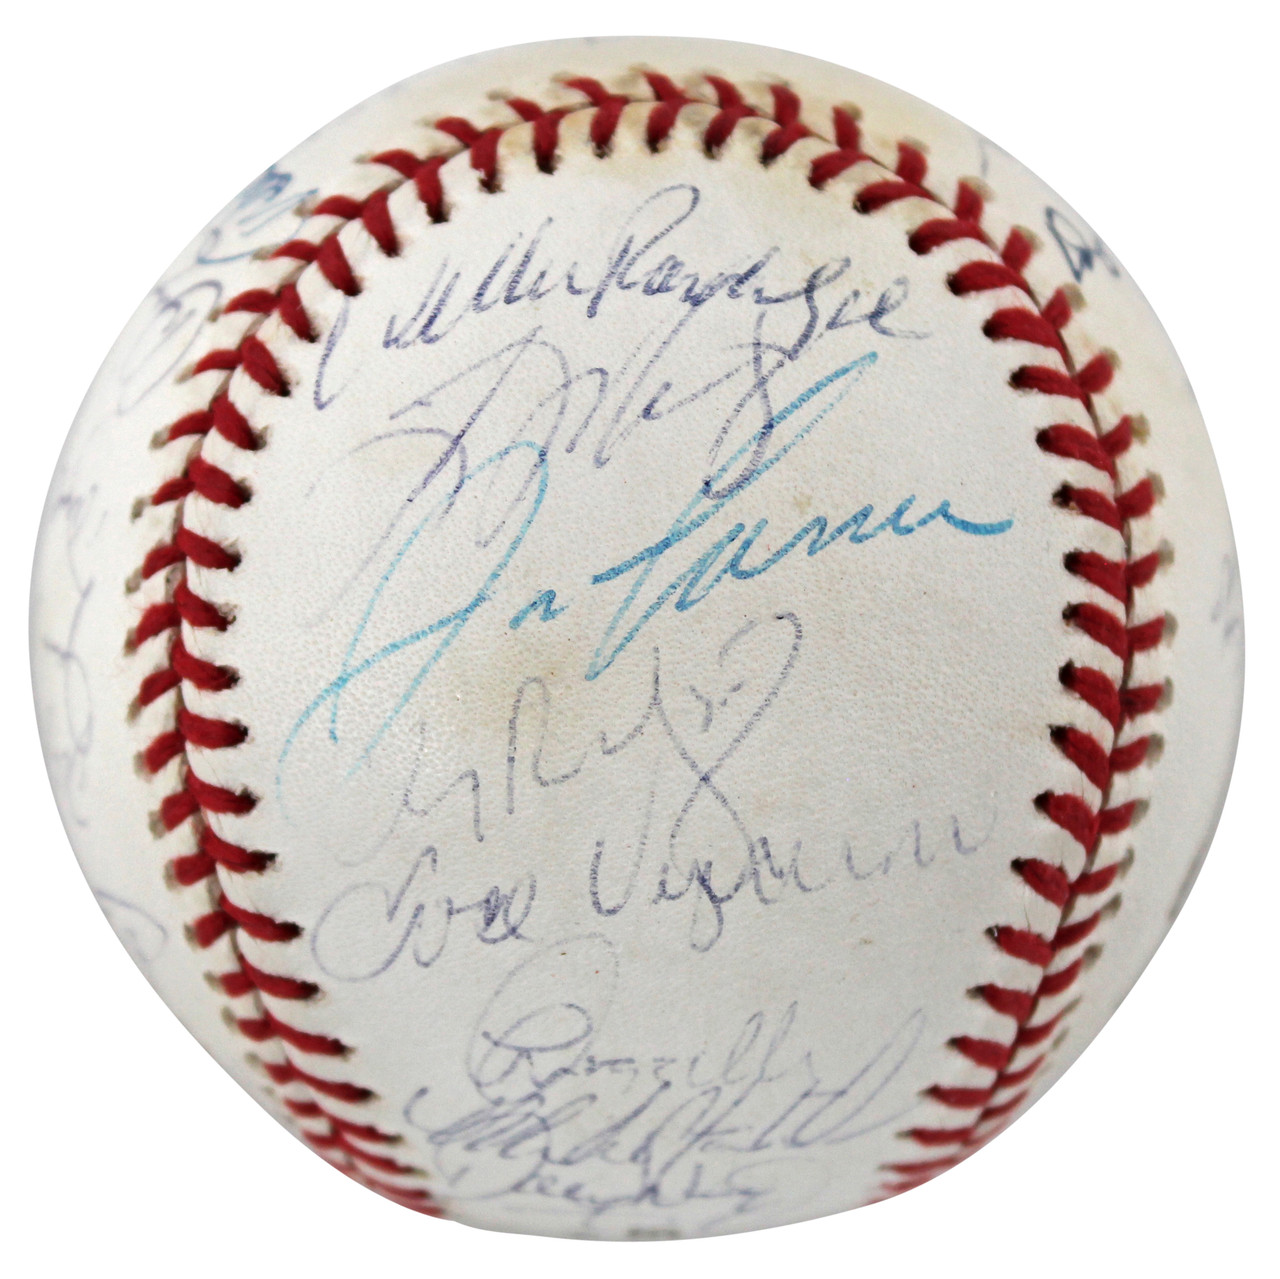 Mariano Rivera, Andy Pettitte, and David Cone signed baseballs